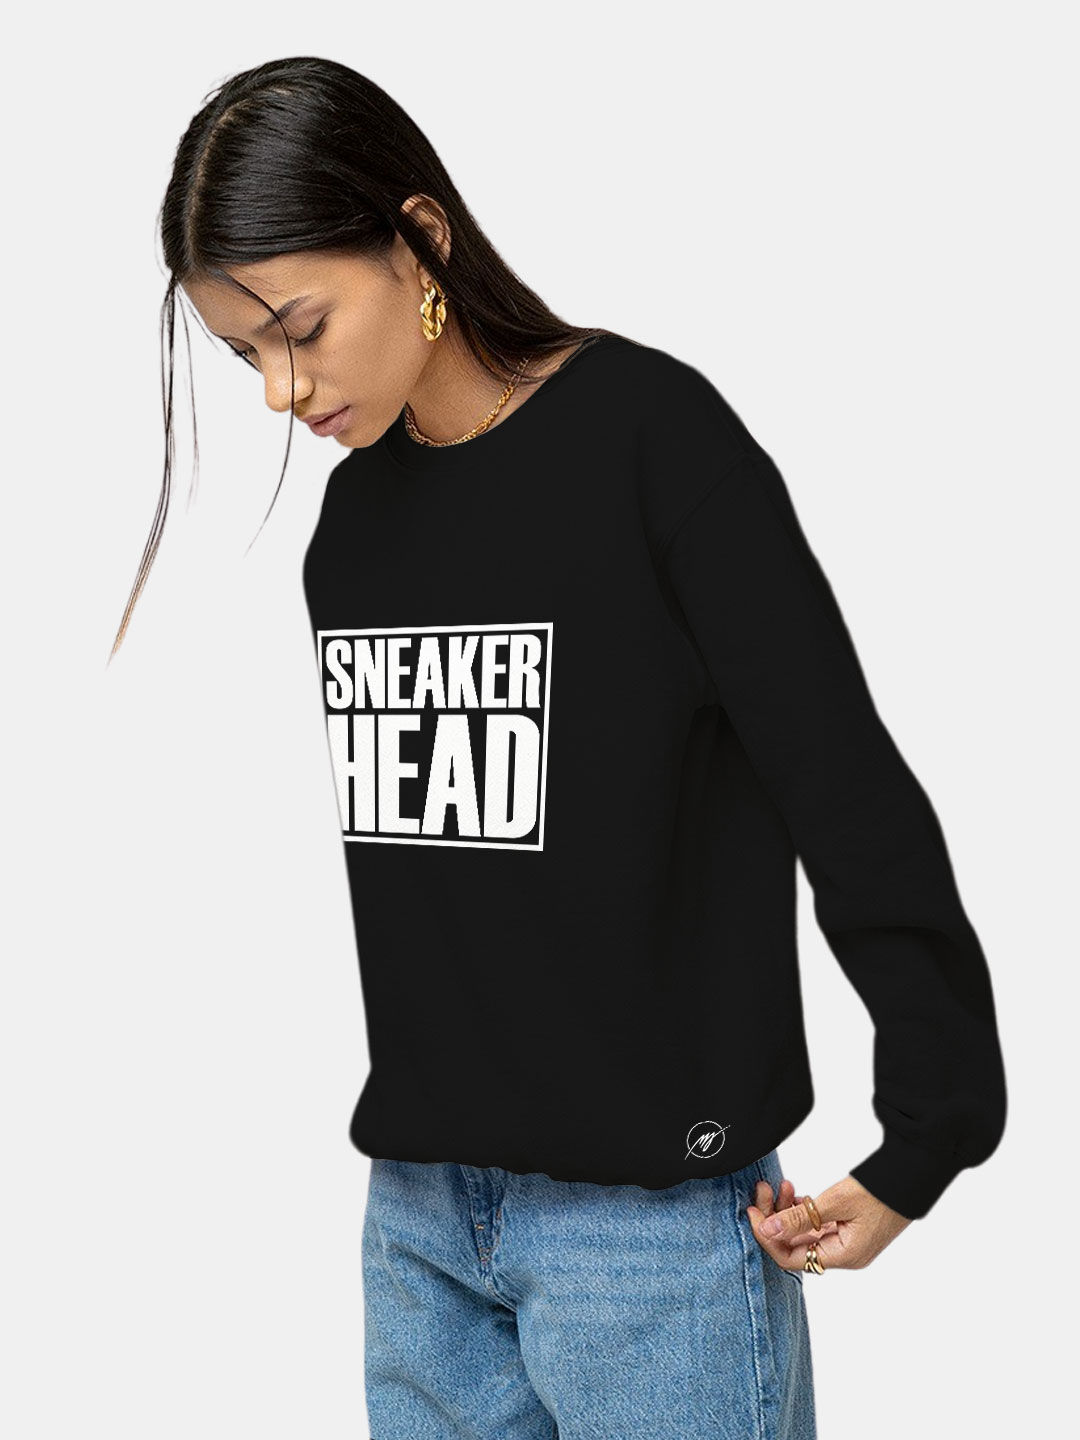 Buy Sneakerhead Double Trouble Womens Sweatshirts Online at Best Price.